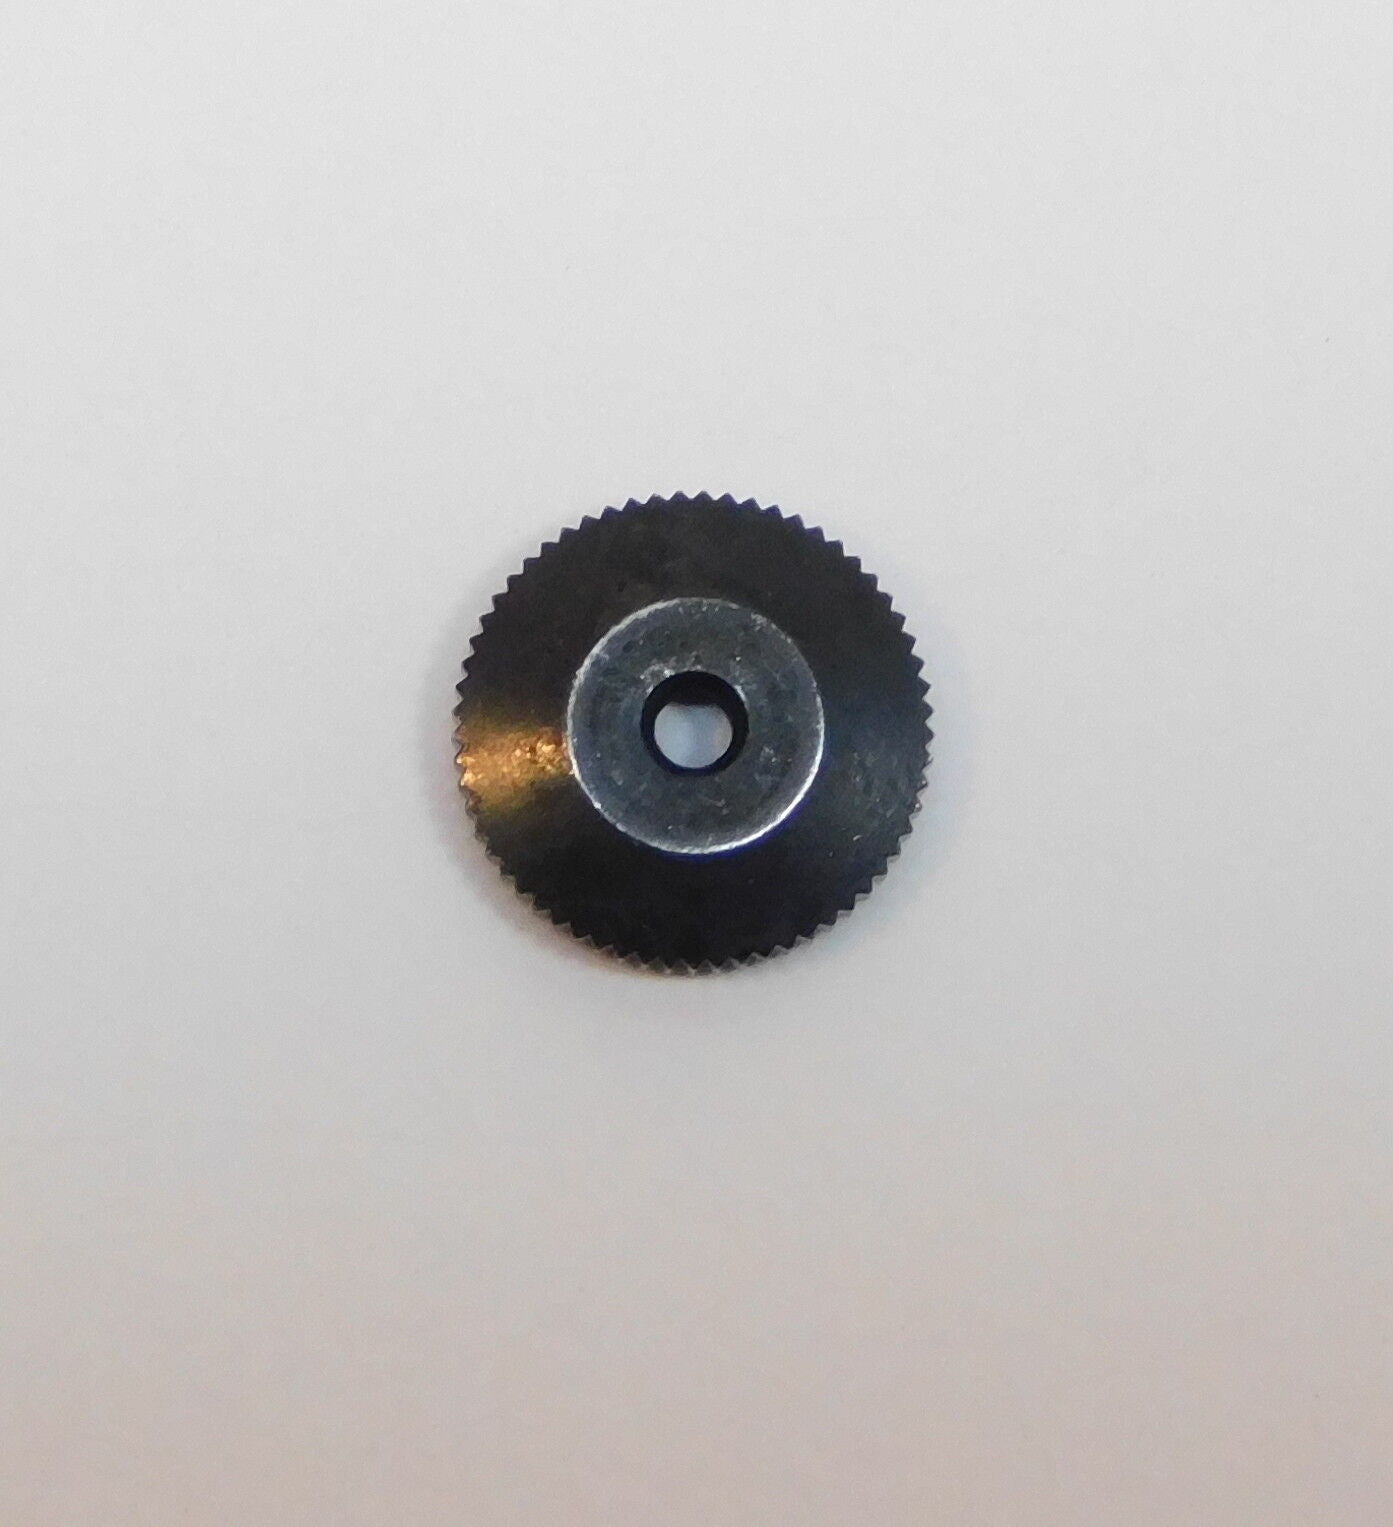 Kieninger Clock Hand Nut Black For Mechanical Grandfather Movement 10 mm 3/8"